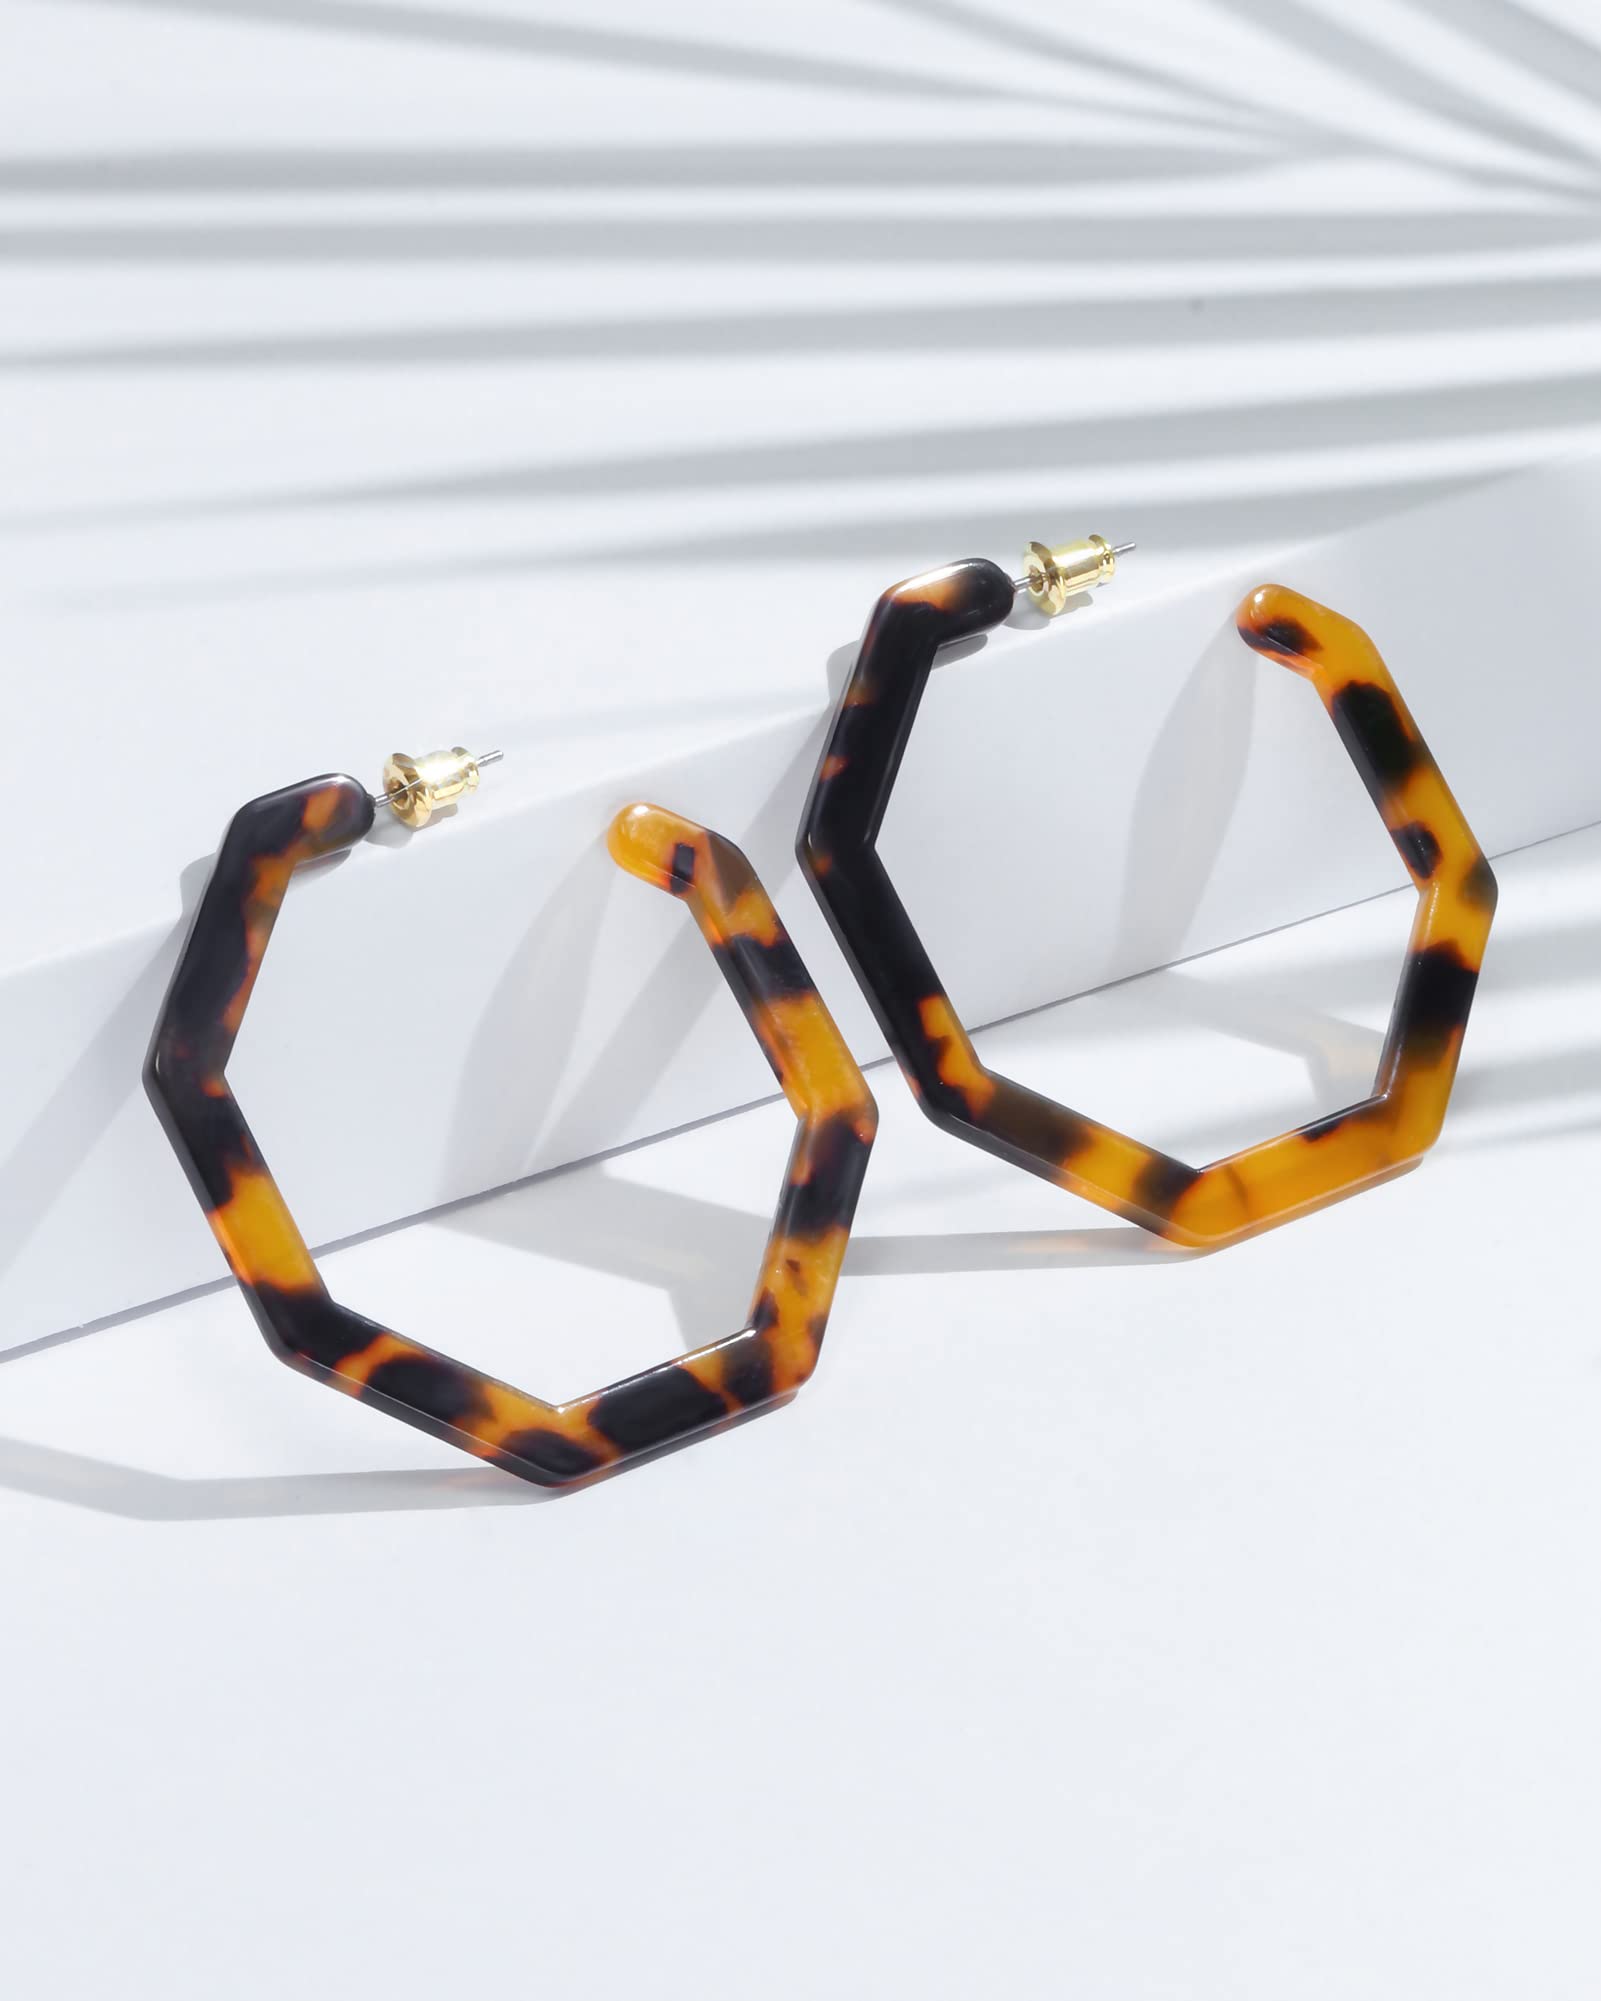 wowshow Acrylic Resin Hoop Earrings for Women Statement Fashion Geometric Octagon Earrings